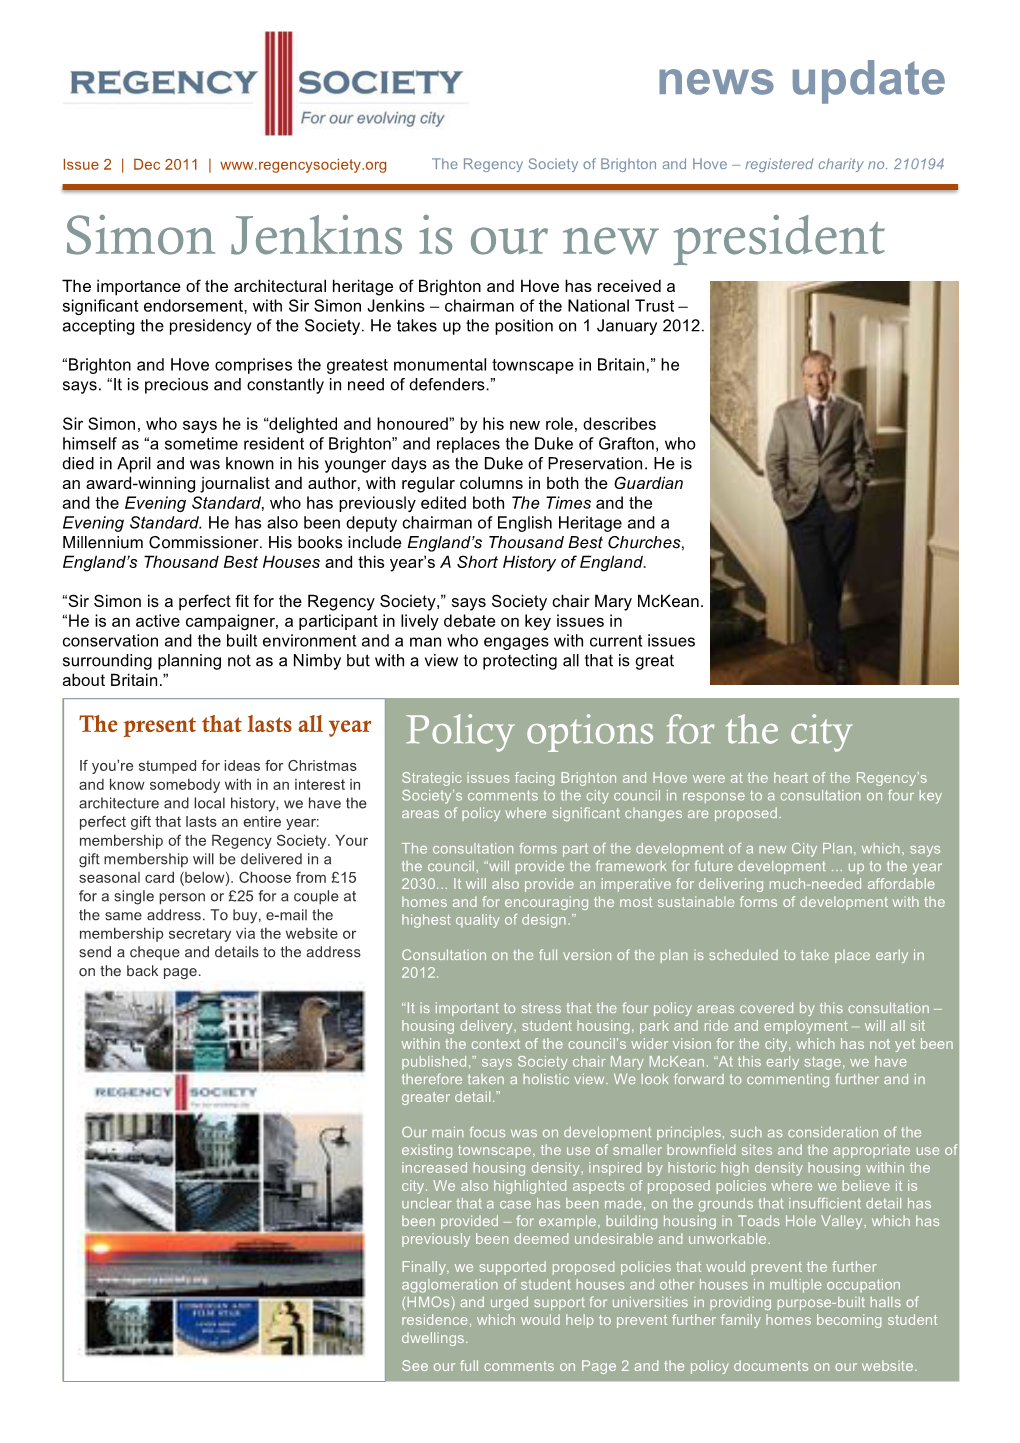 Simon Jenkins Is Our New President